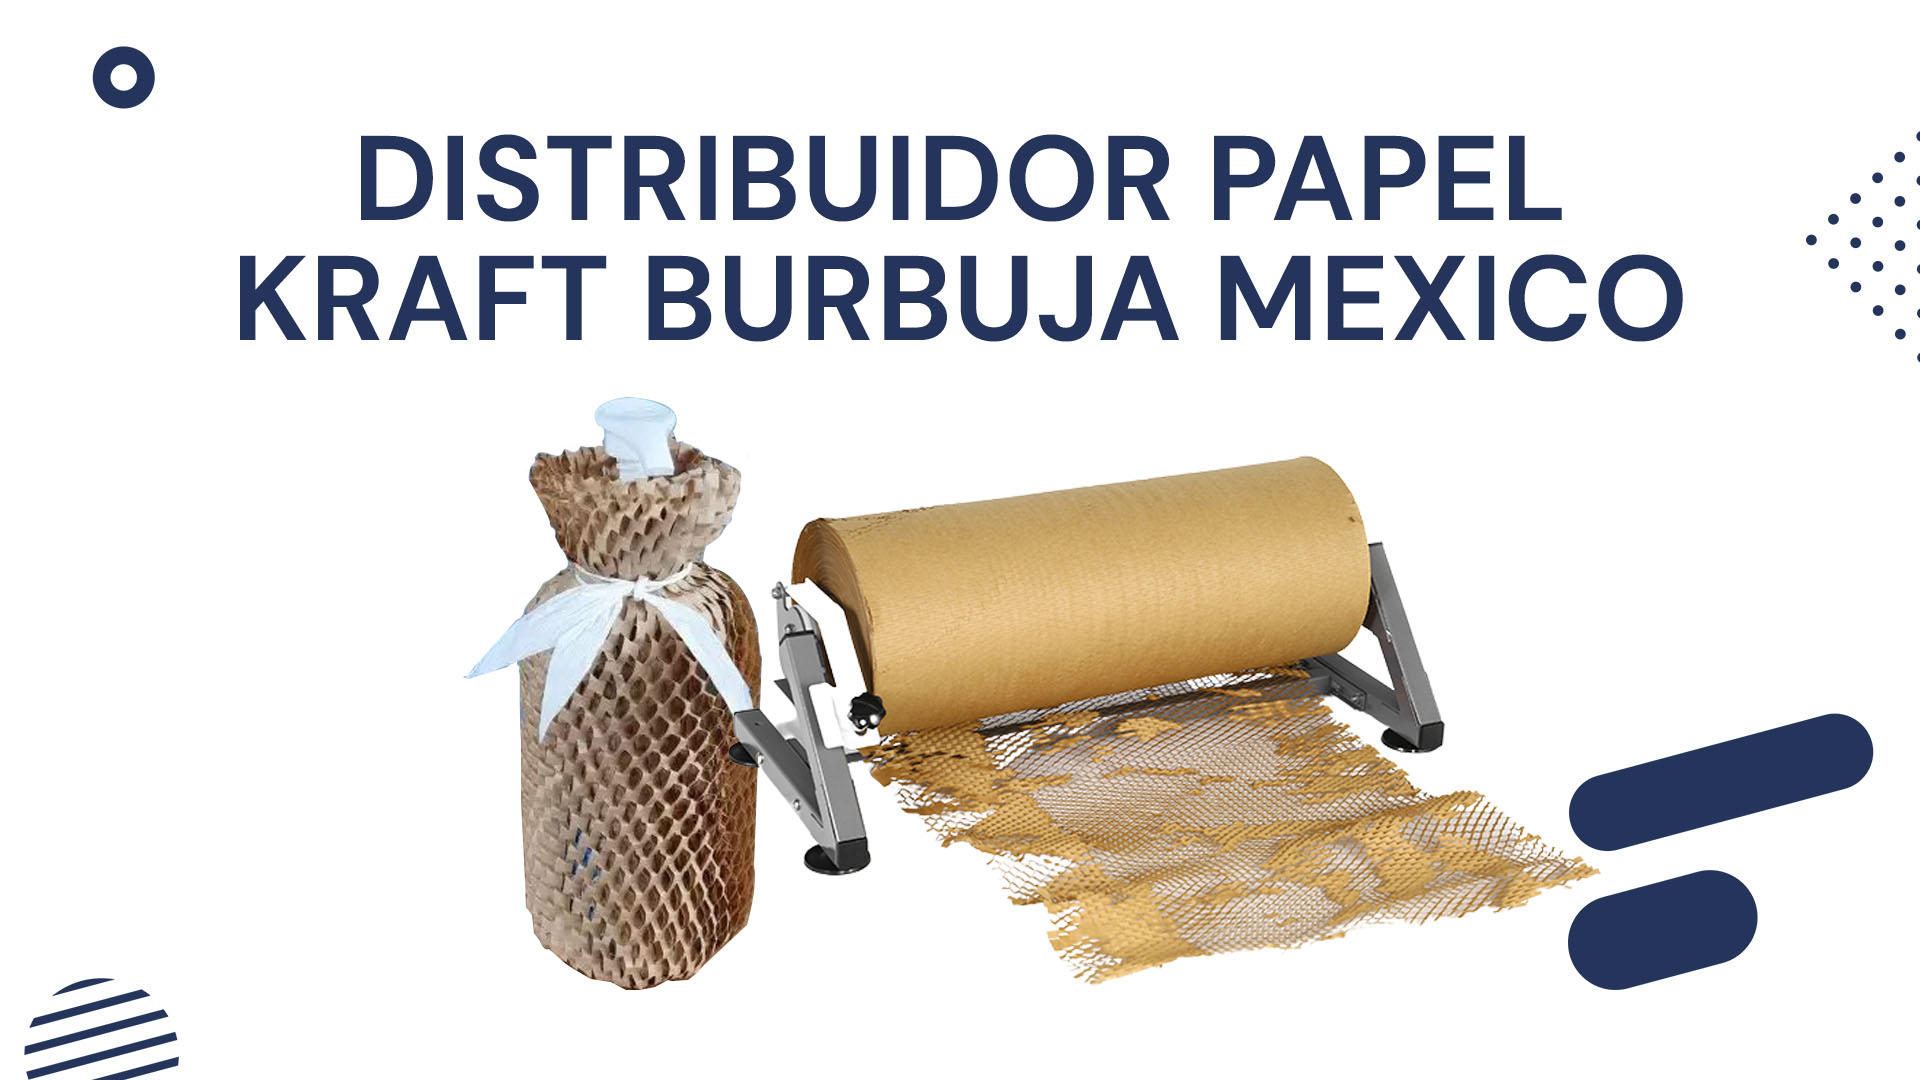 Distribuidor papel Kraft burbuja Mexico Distribuidor papel Kraft burbuja Mexico